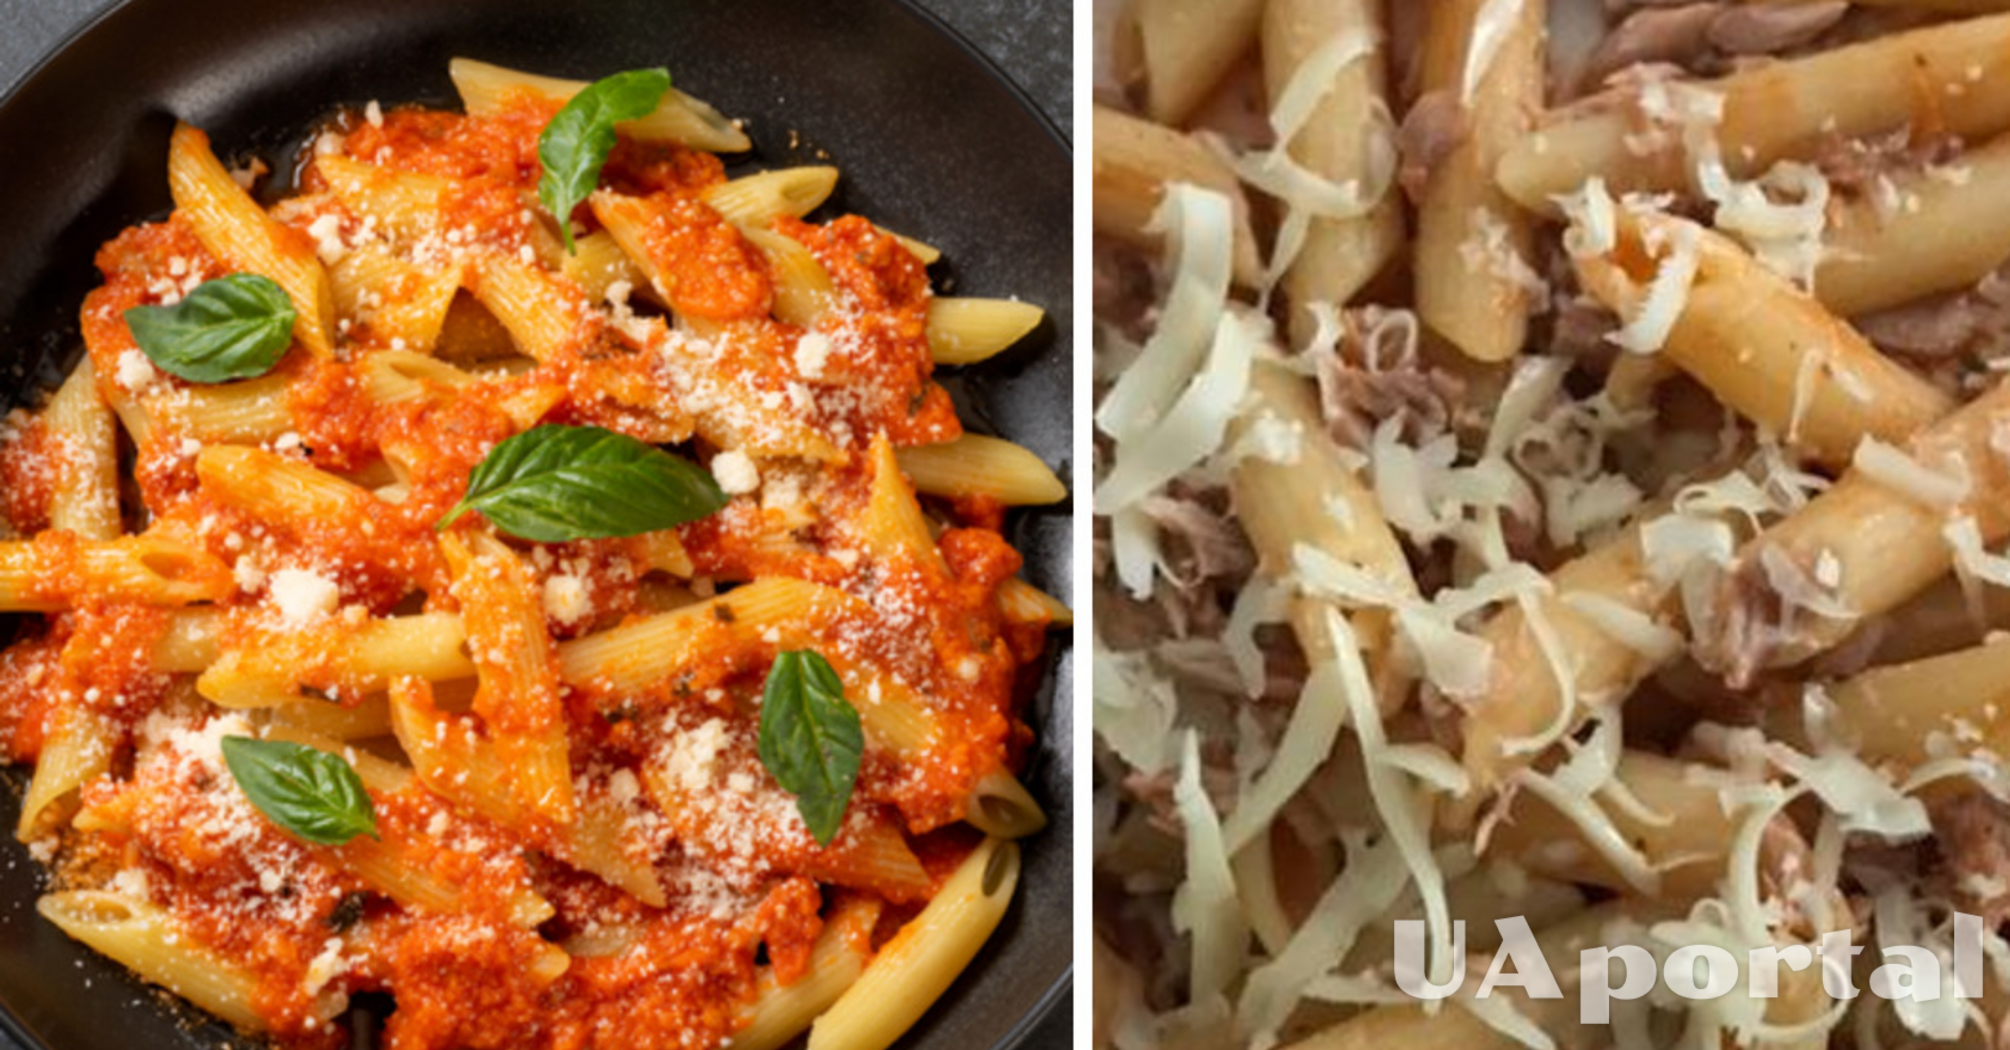 Dinner in 15 minutes: tuna pasta recipe